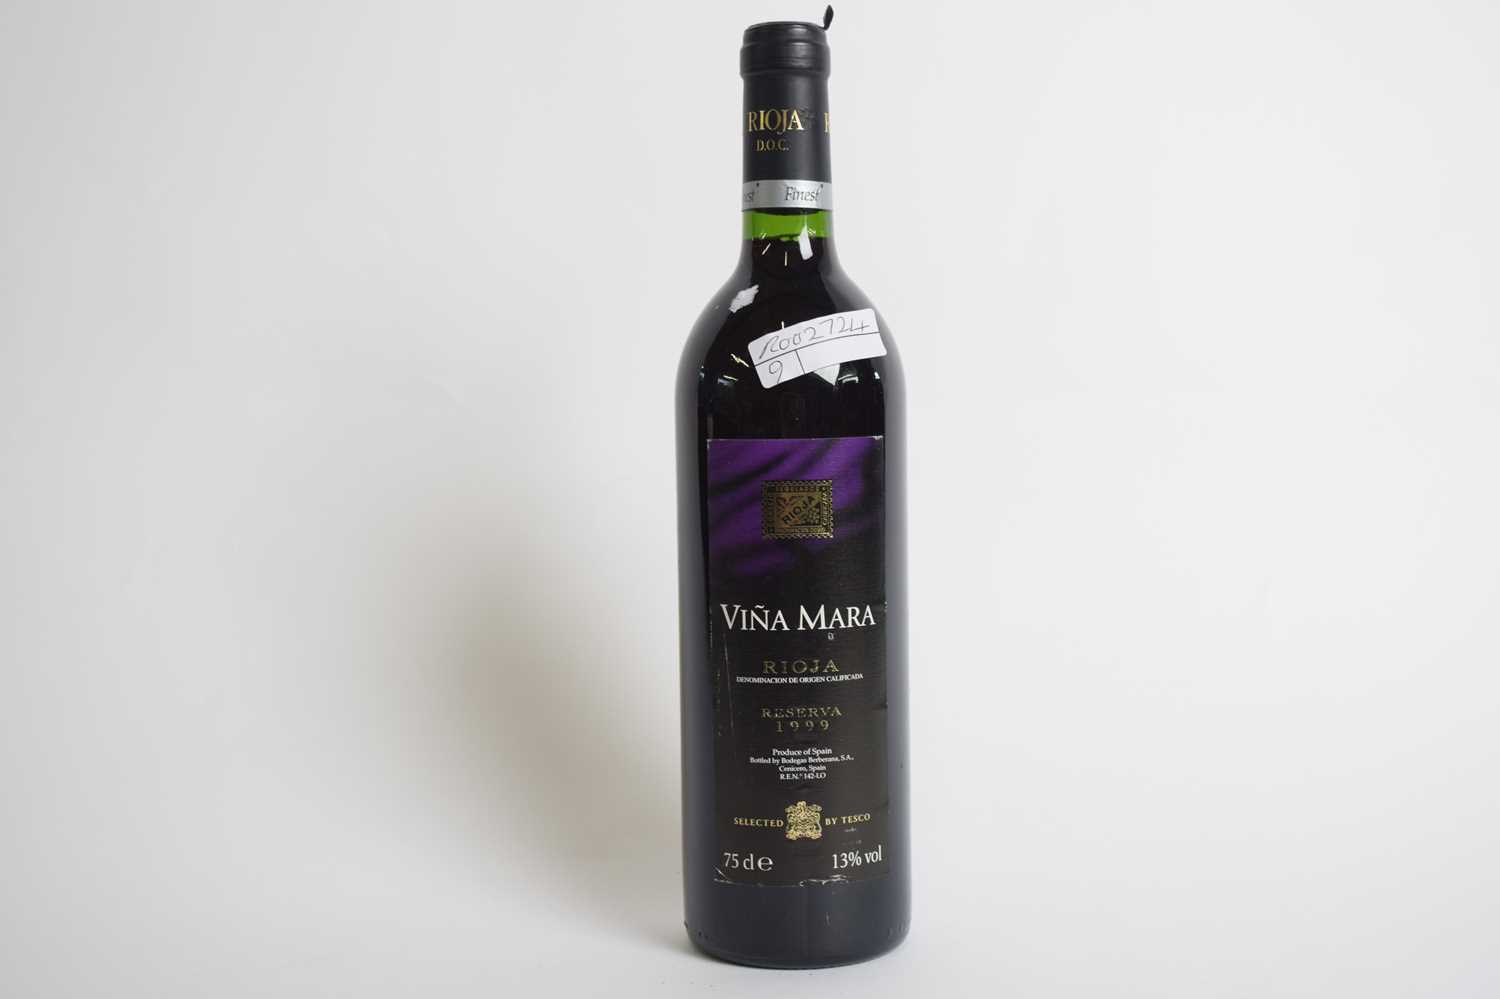 One bottle Vina Mara Rioja, 75cl